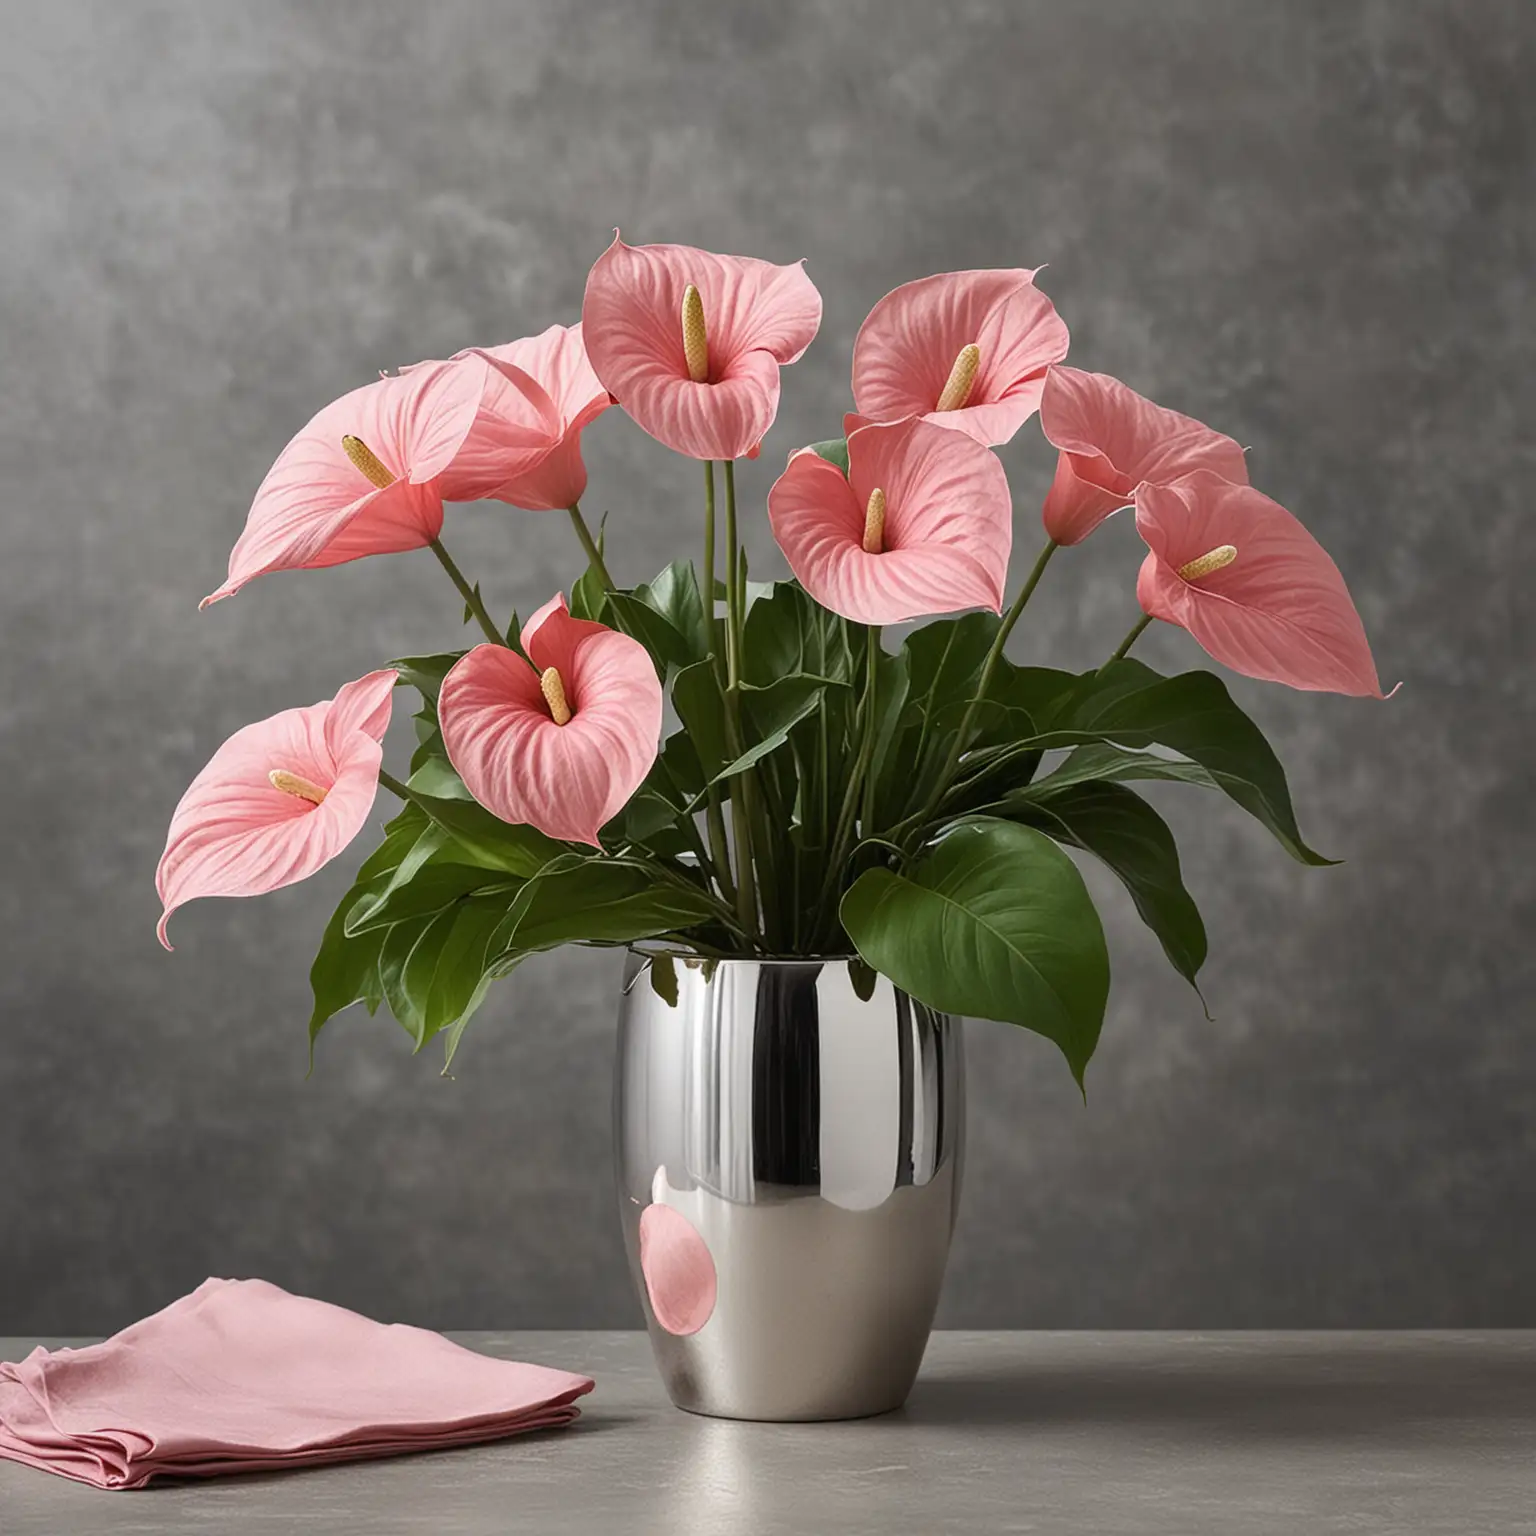 simple elegant centerpiece with pink anthuriums in silver modern elegant vase; keep background neutral